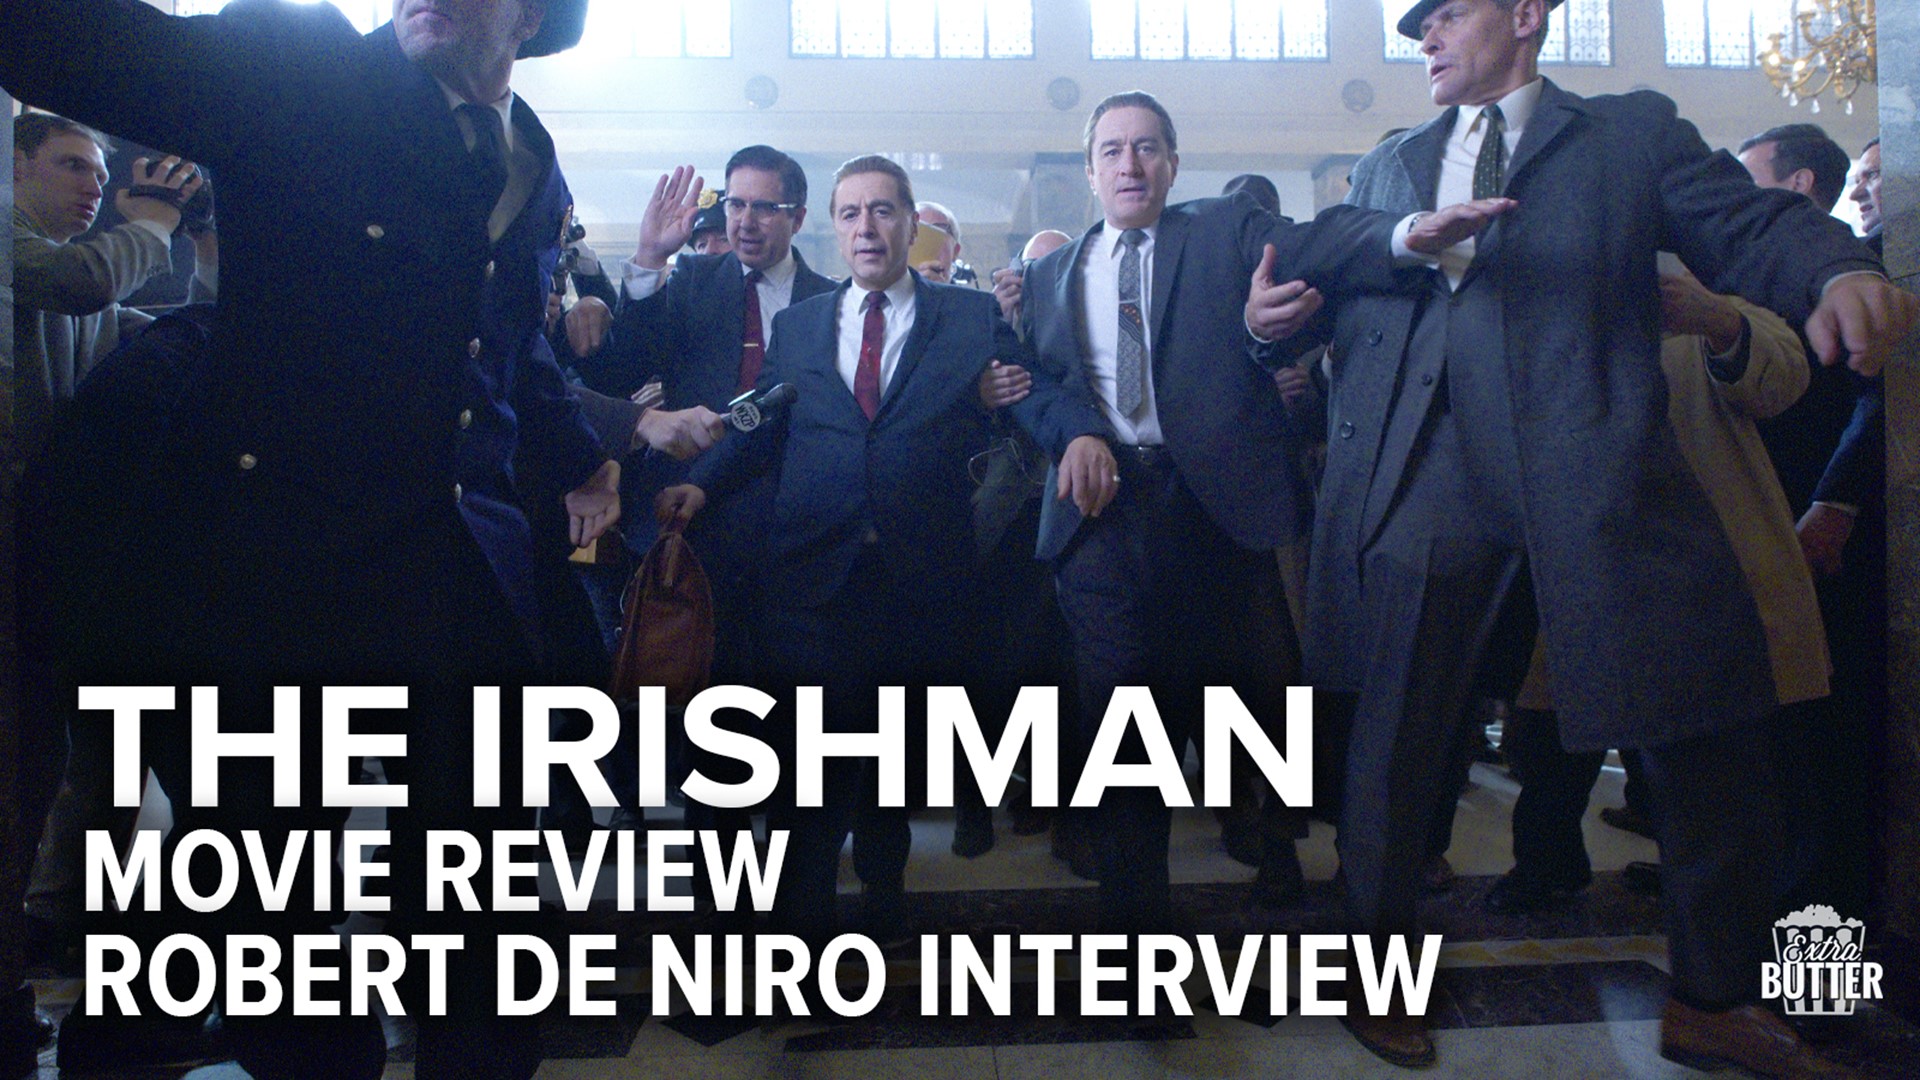 Extra Butter reviews the new Martin Scorsese movie 'The Irishman' starring Robert De Niro, Al Pacino, and Joe Pesci. Plus, Maleficent wins the box office again.